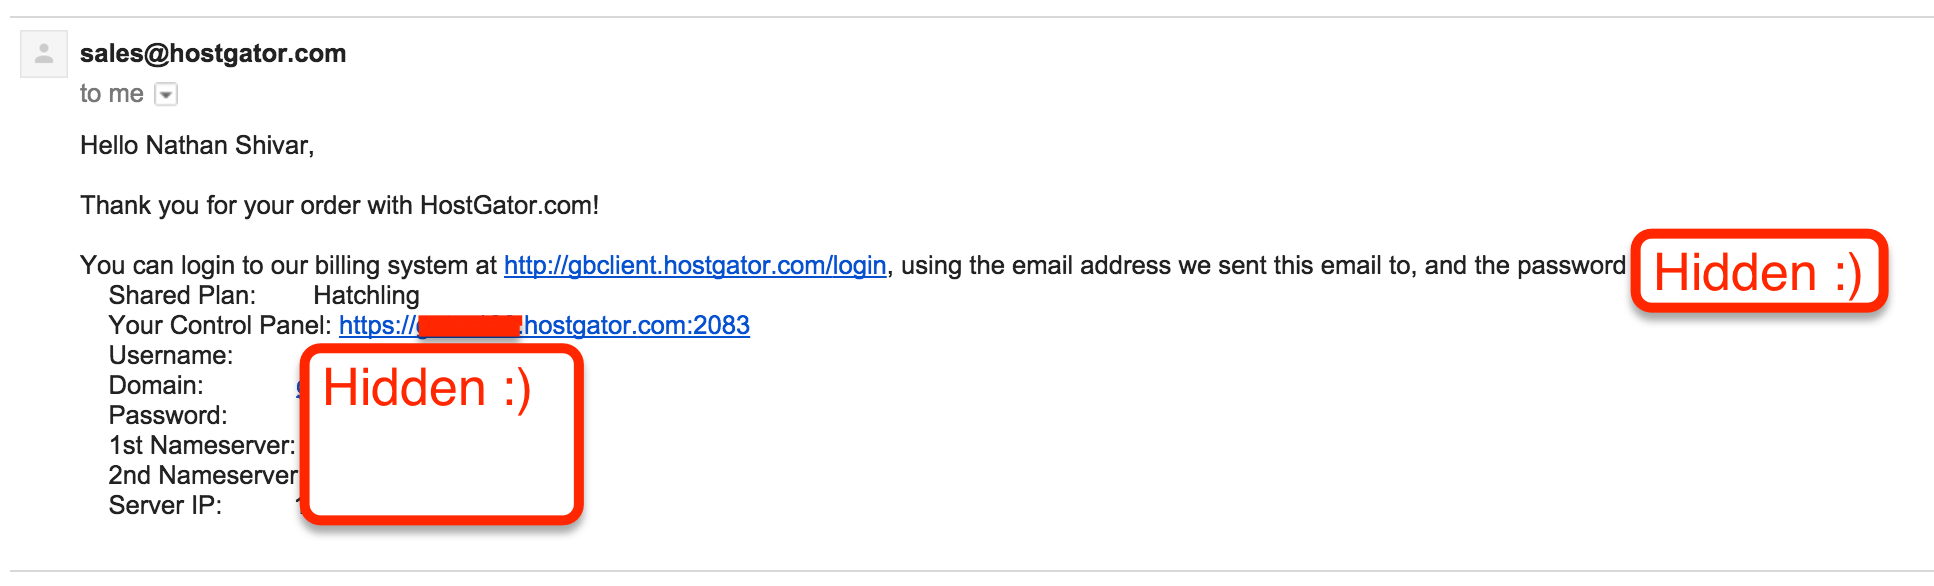 HostGator Email